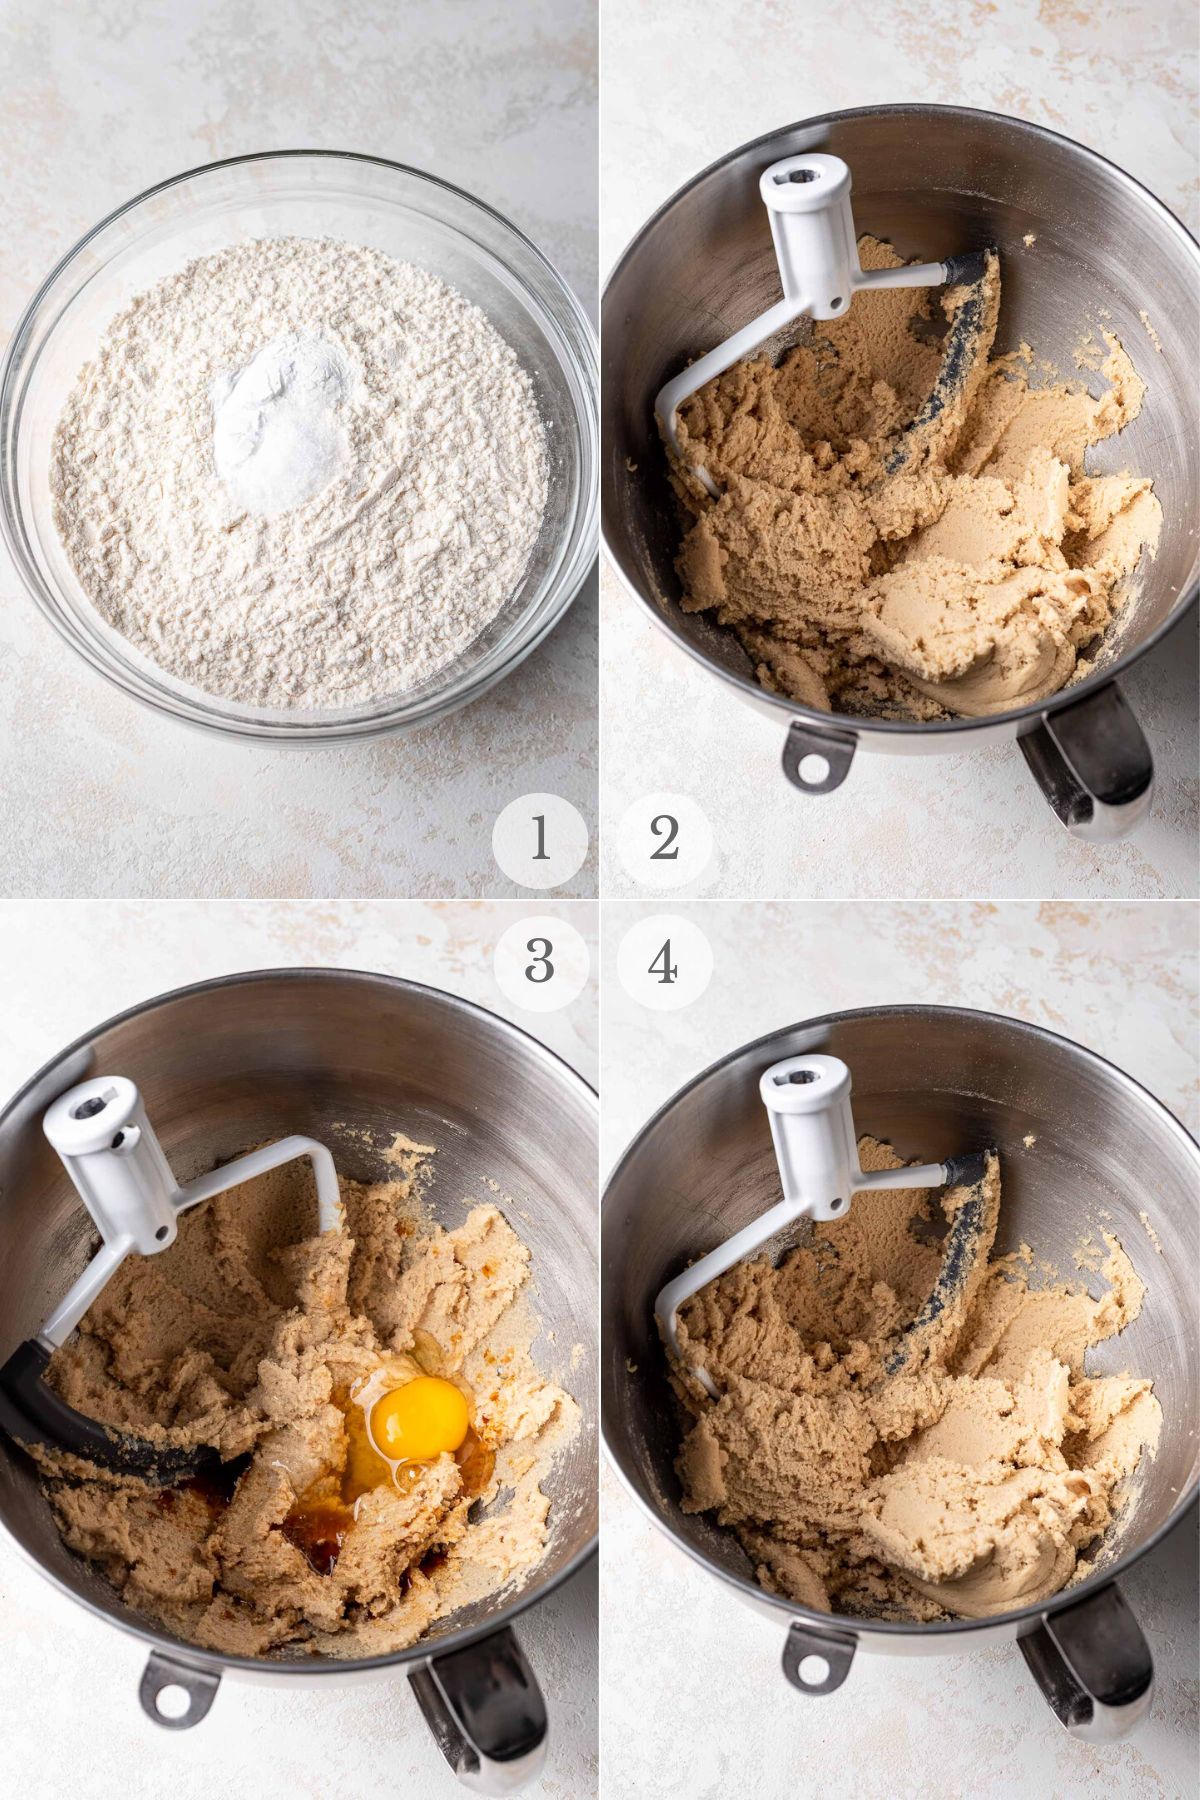 white chocolate macadamia nut cookies recipe steps 1-4.